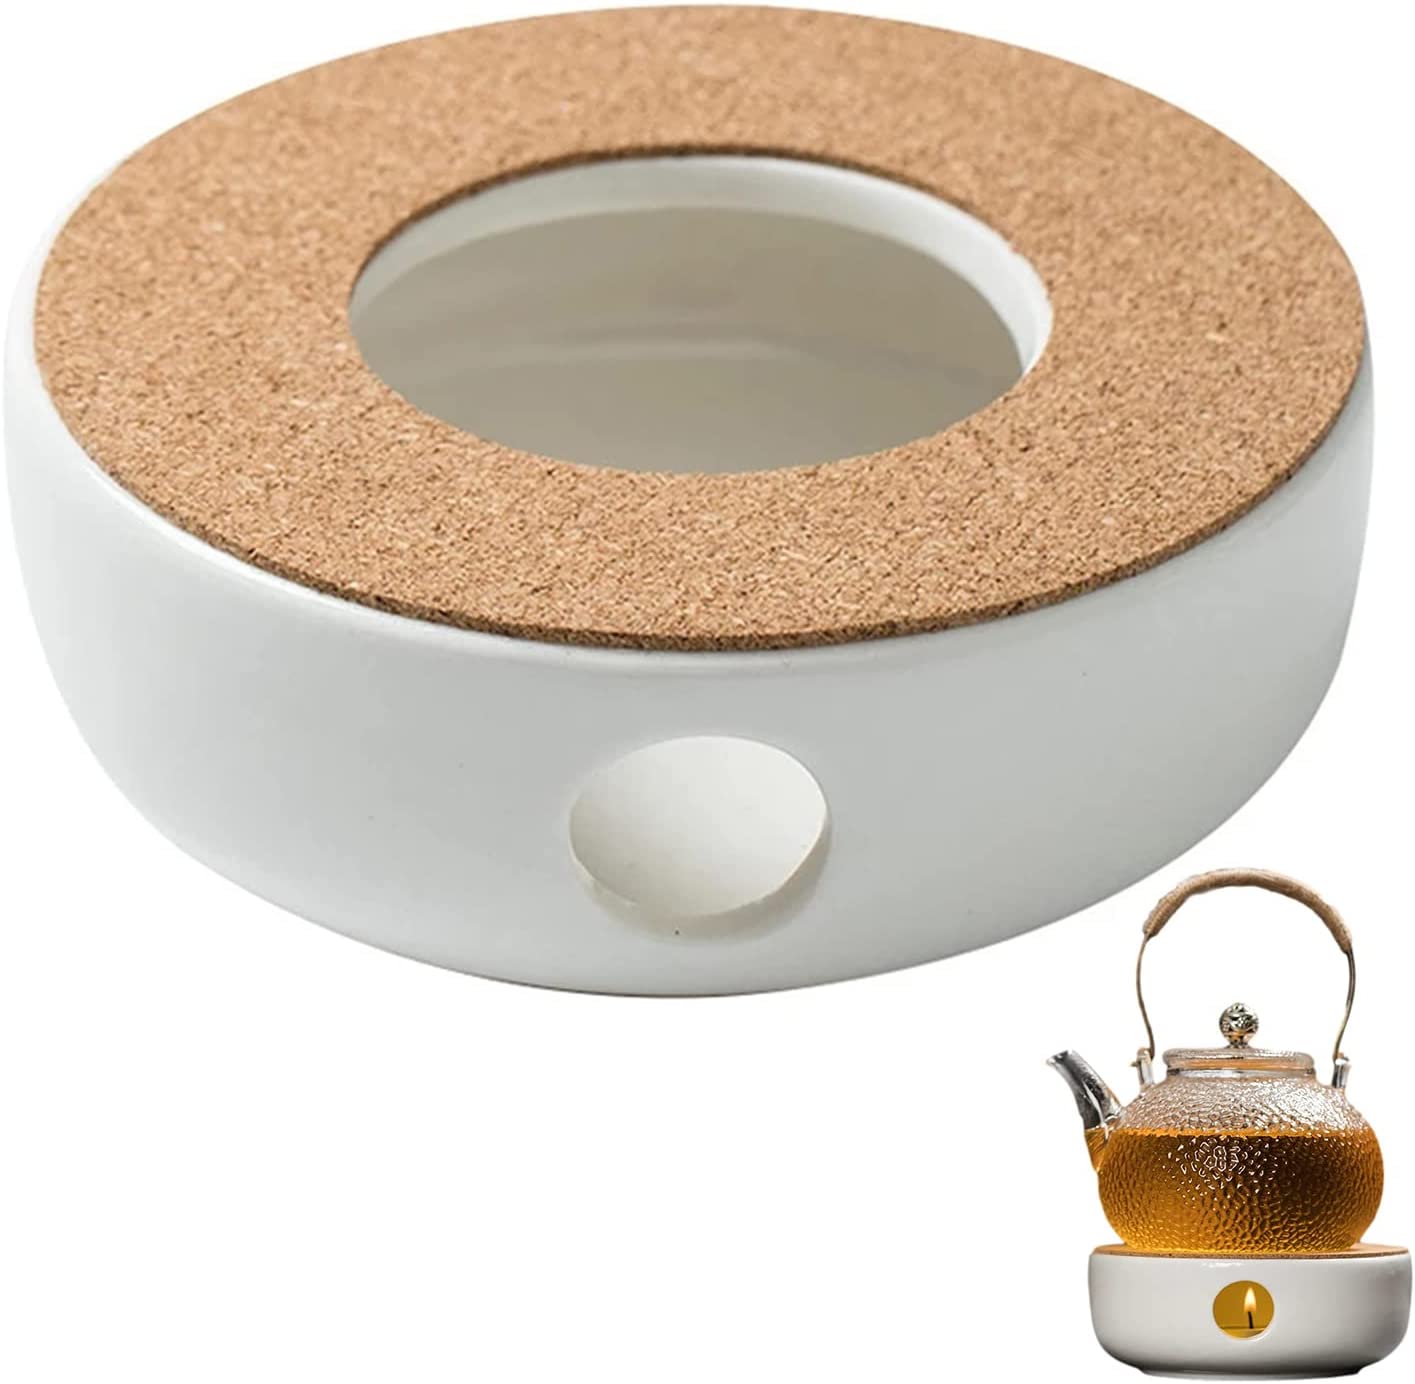 GDWD Teapot Warmer for Teapot, Teapot Porcelain, Hollow Carved Design, Classic Porcelain Teapot Warmer with Cork Warmer Teapot Base, Tea Stove Milk Warmer for Home Cafe Tea Milk (General)